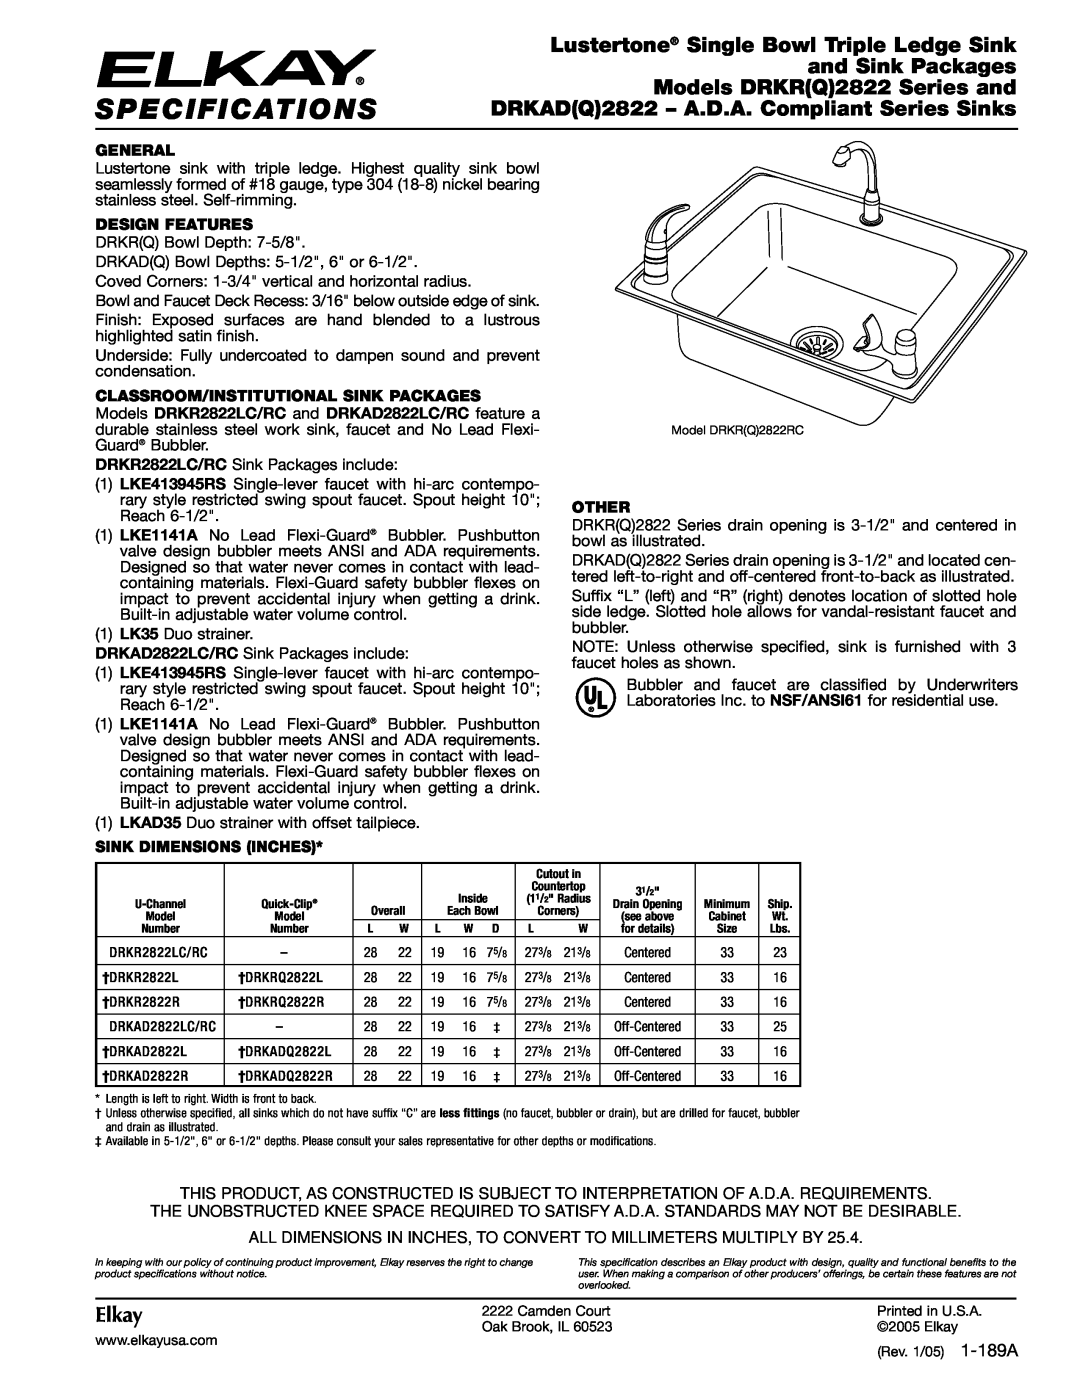 Elkay DRKR(Q)2822RC specifications Specifications, Lustertone Single Bowl Triple Ledge Sink, and Sink Packages, Elkay 